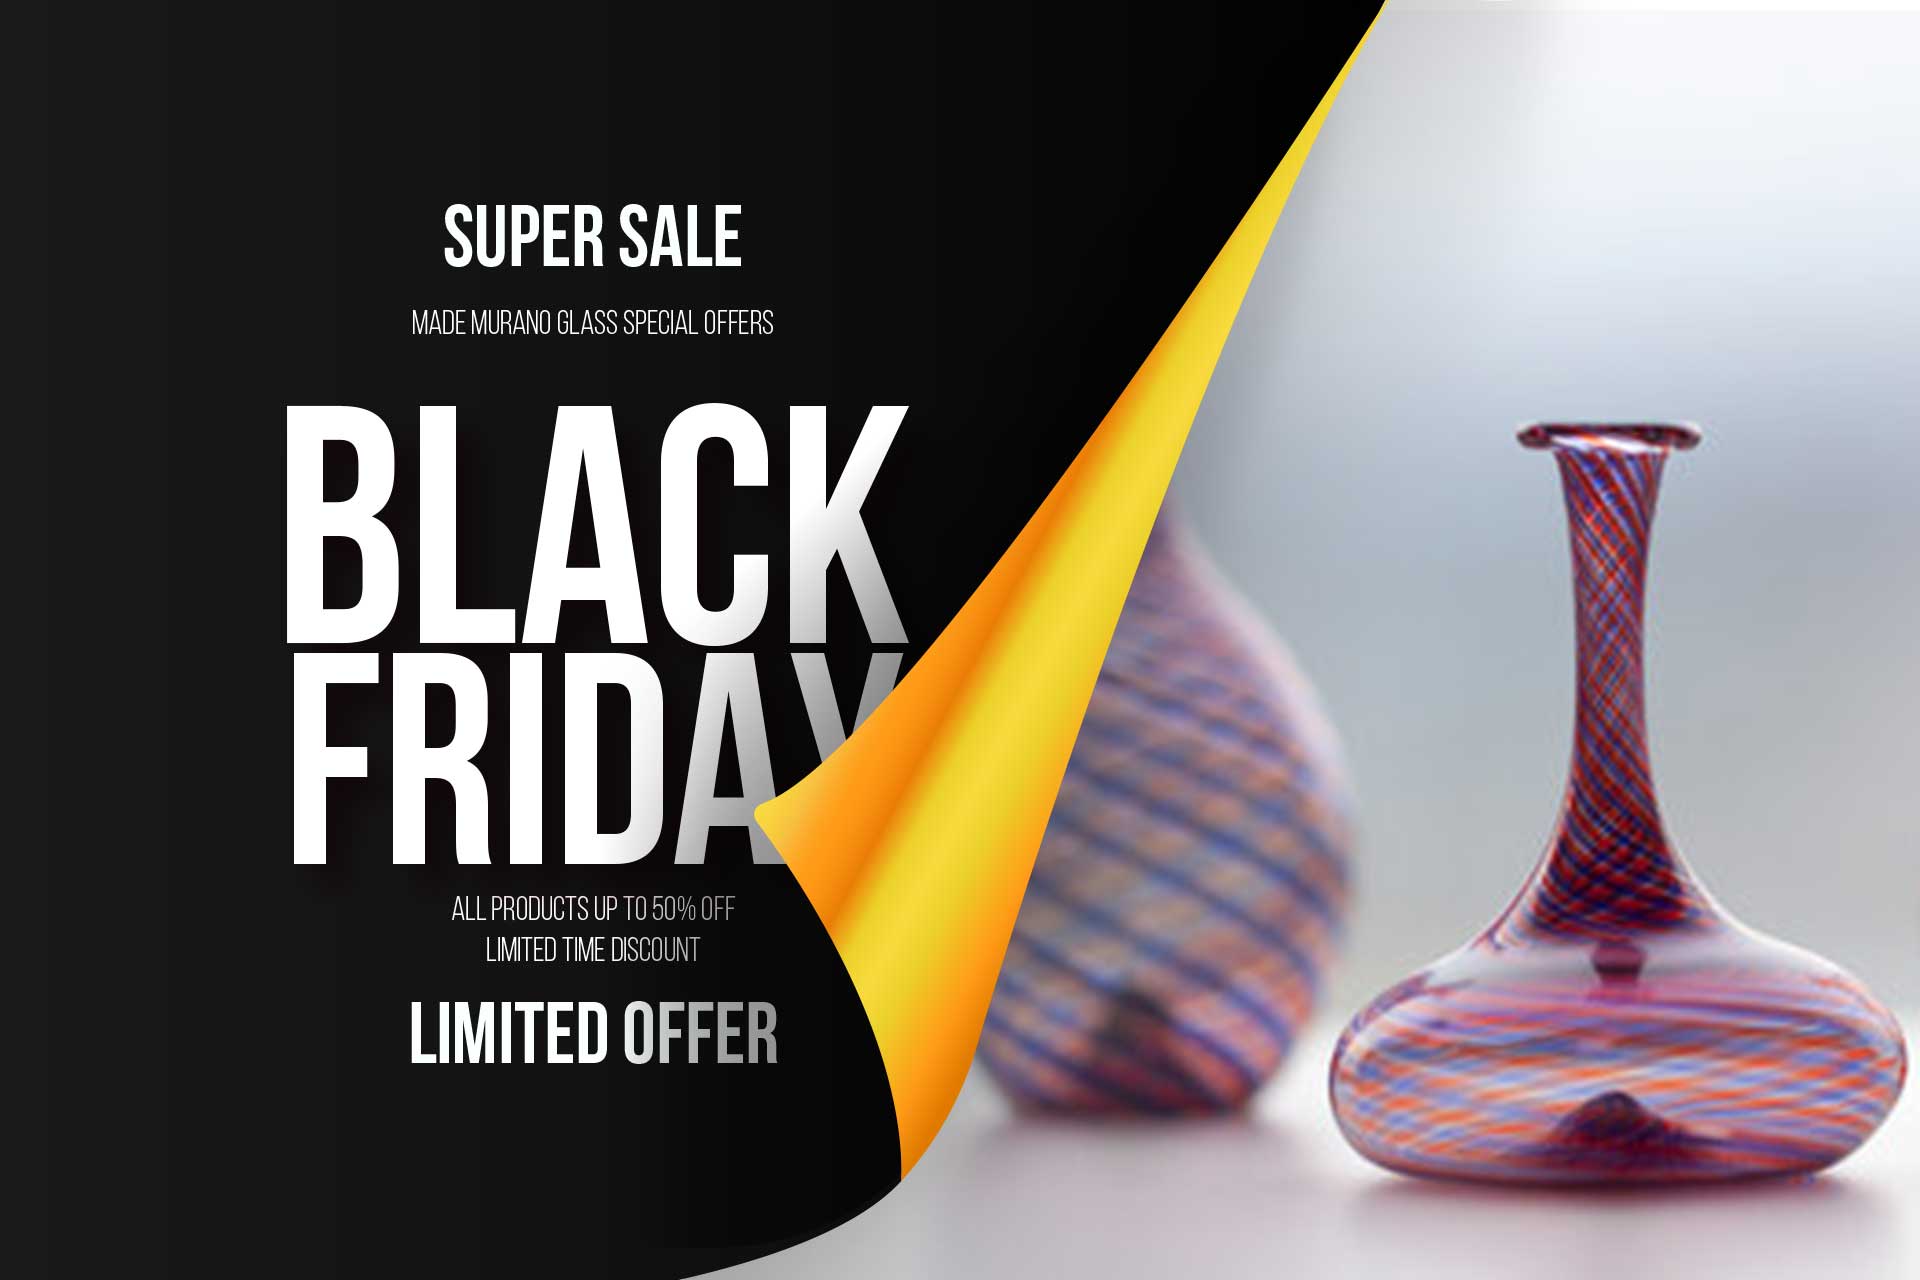 Black Friday Murano Glass offers